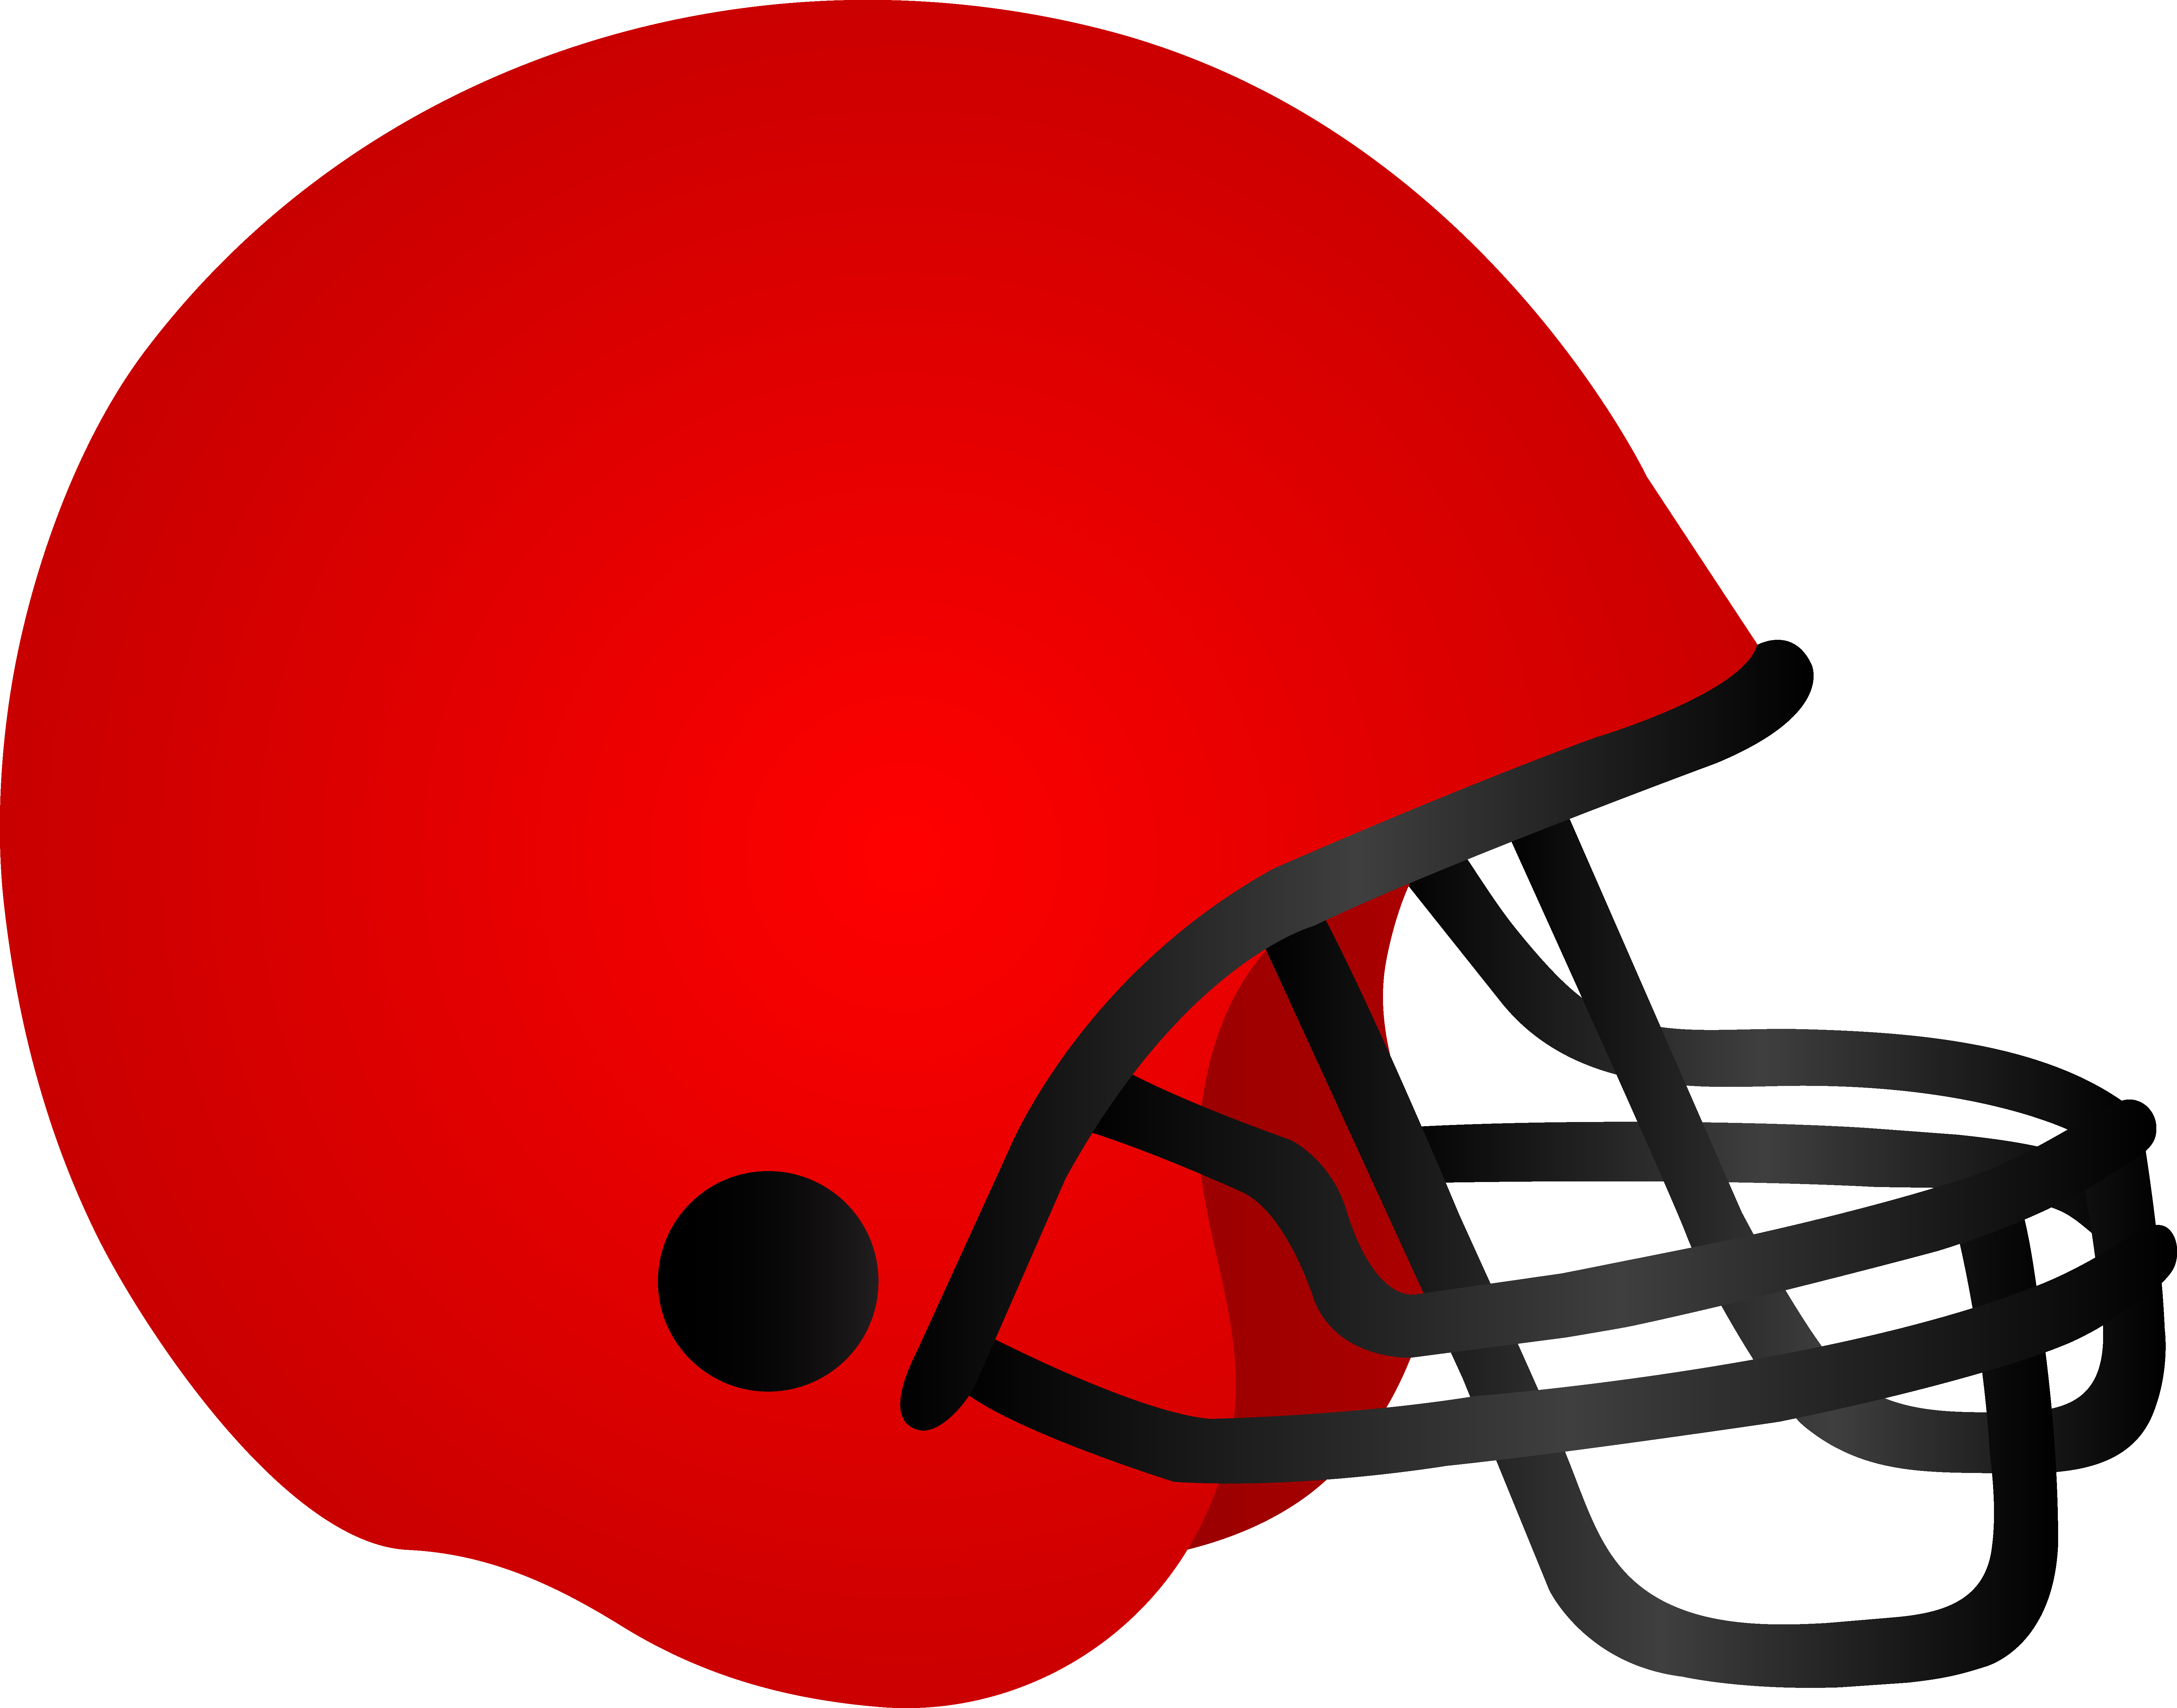 Football Helmet Image - ClipArt Best